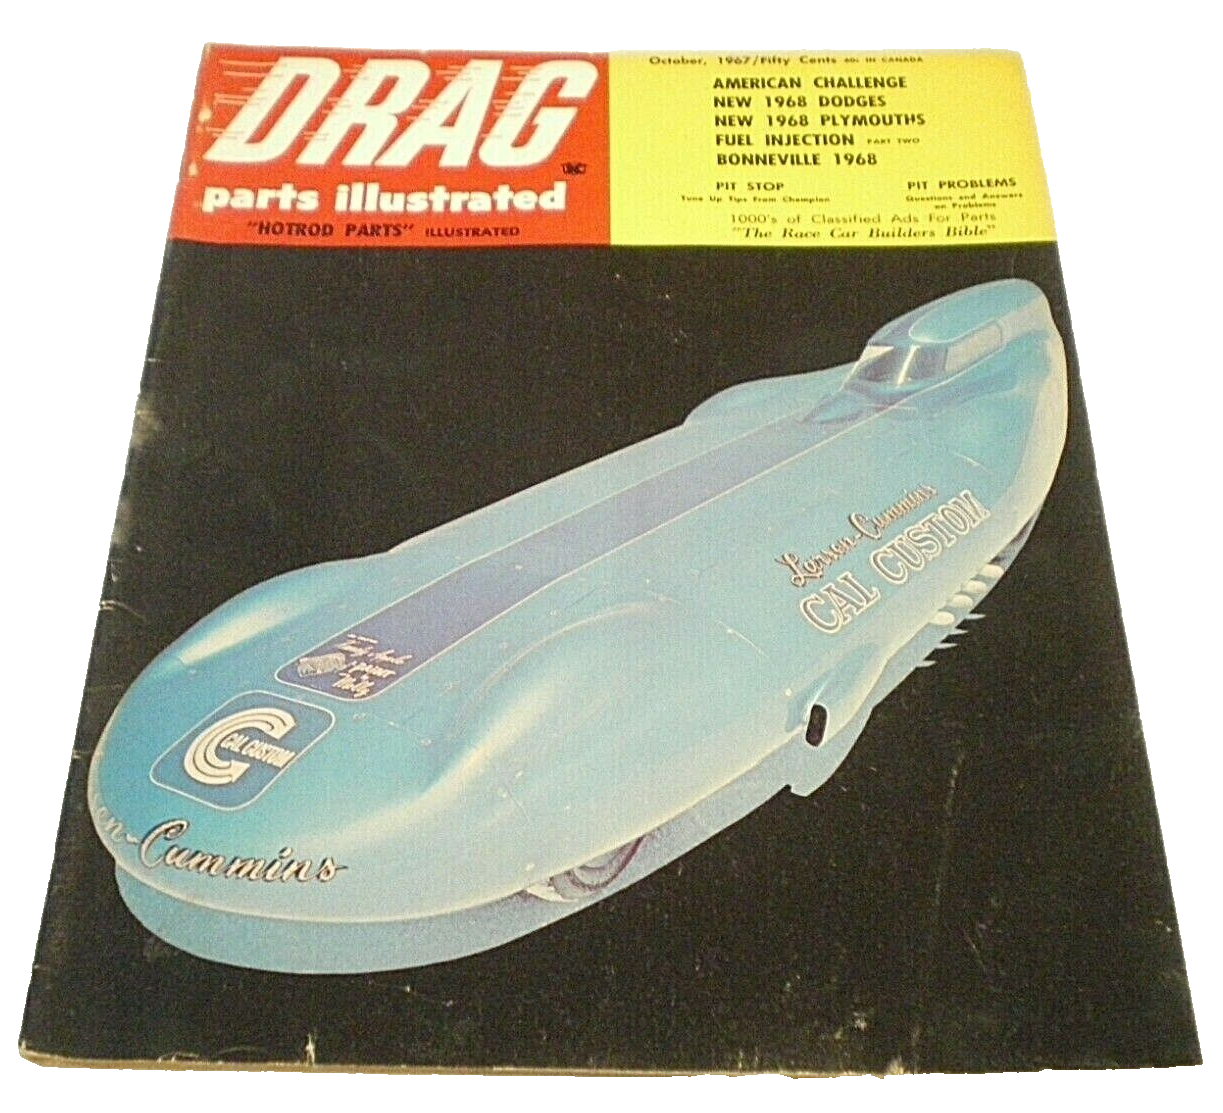 Primary image for Vtg DRAG PARTS ILLUSTRATED (October, 1967) Hot Rod Race Car MAGAZINE Bonneville